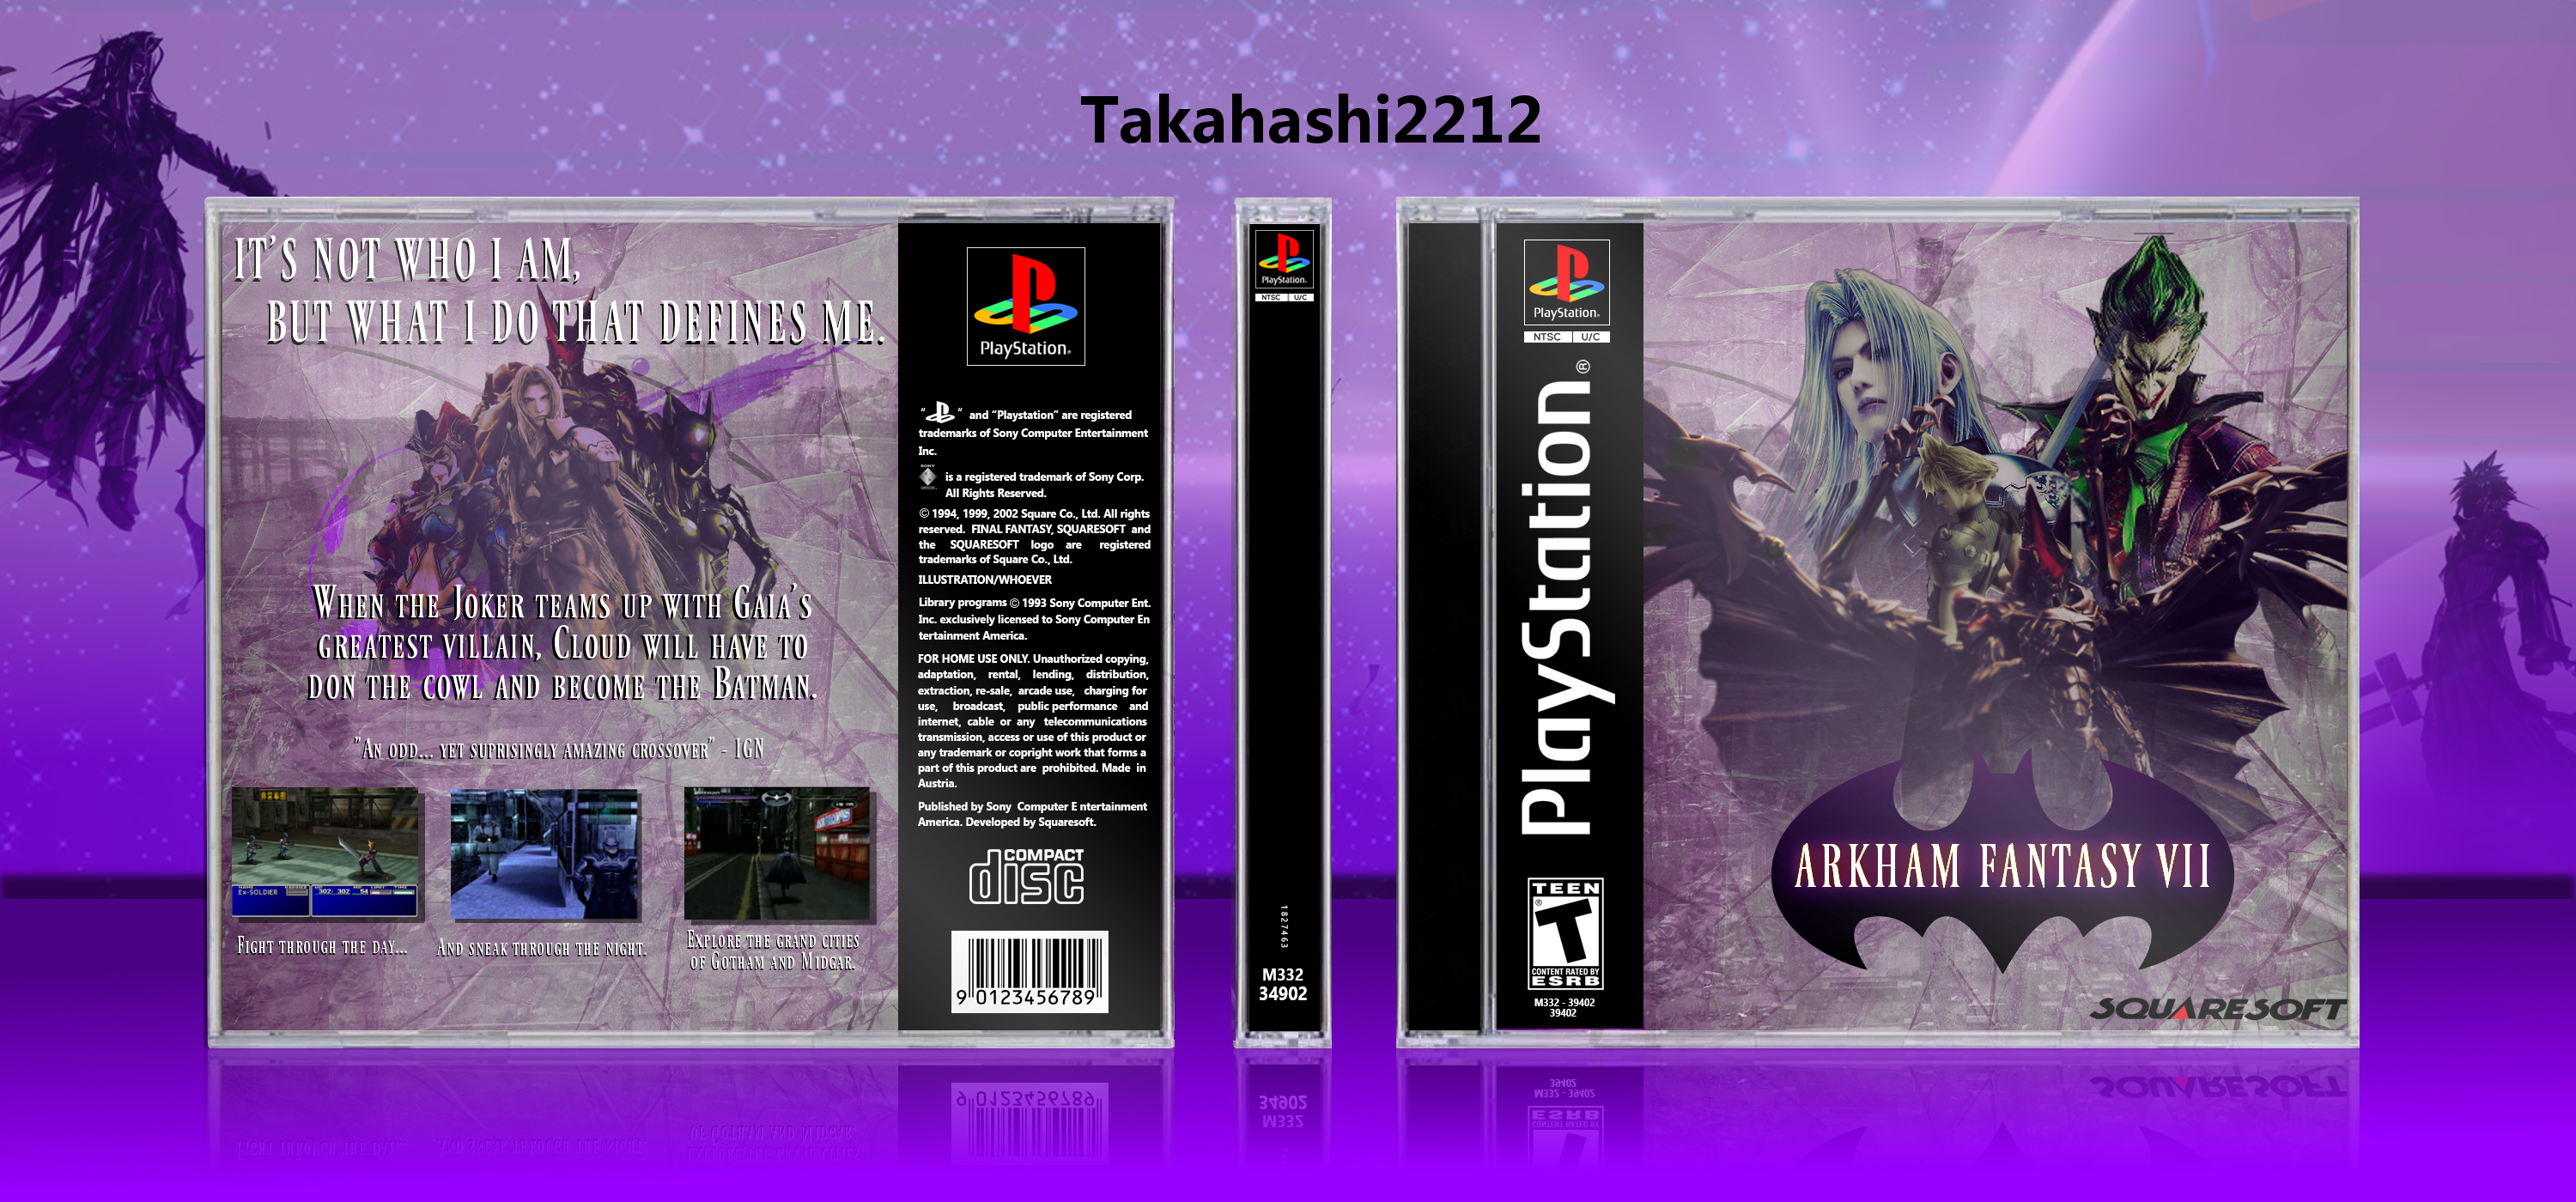 Arkham Fantasy VII box cover